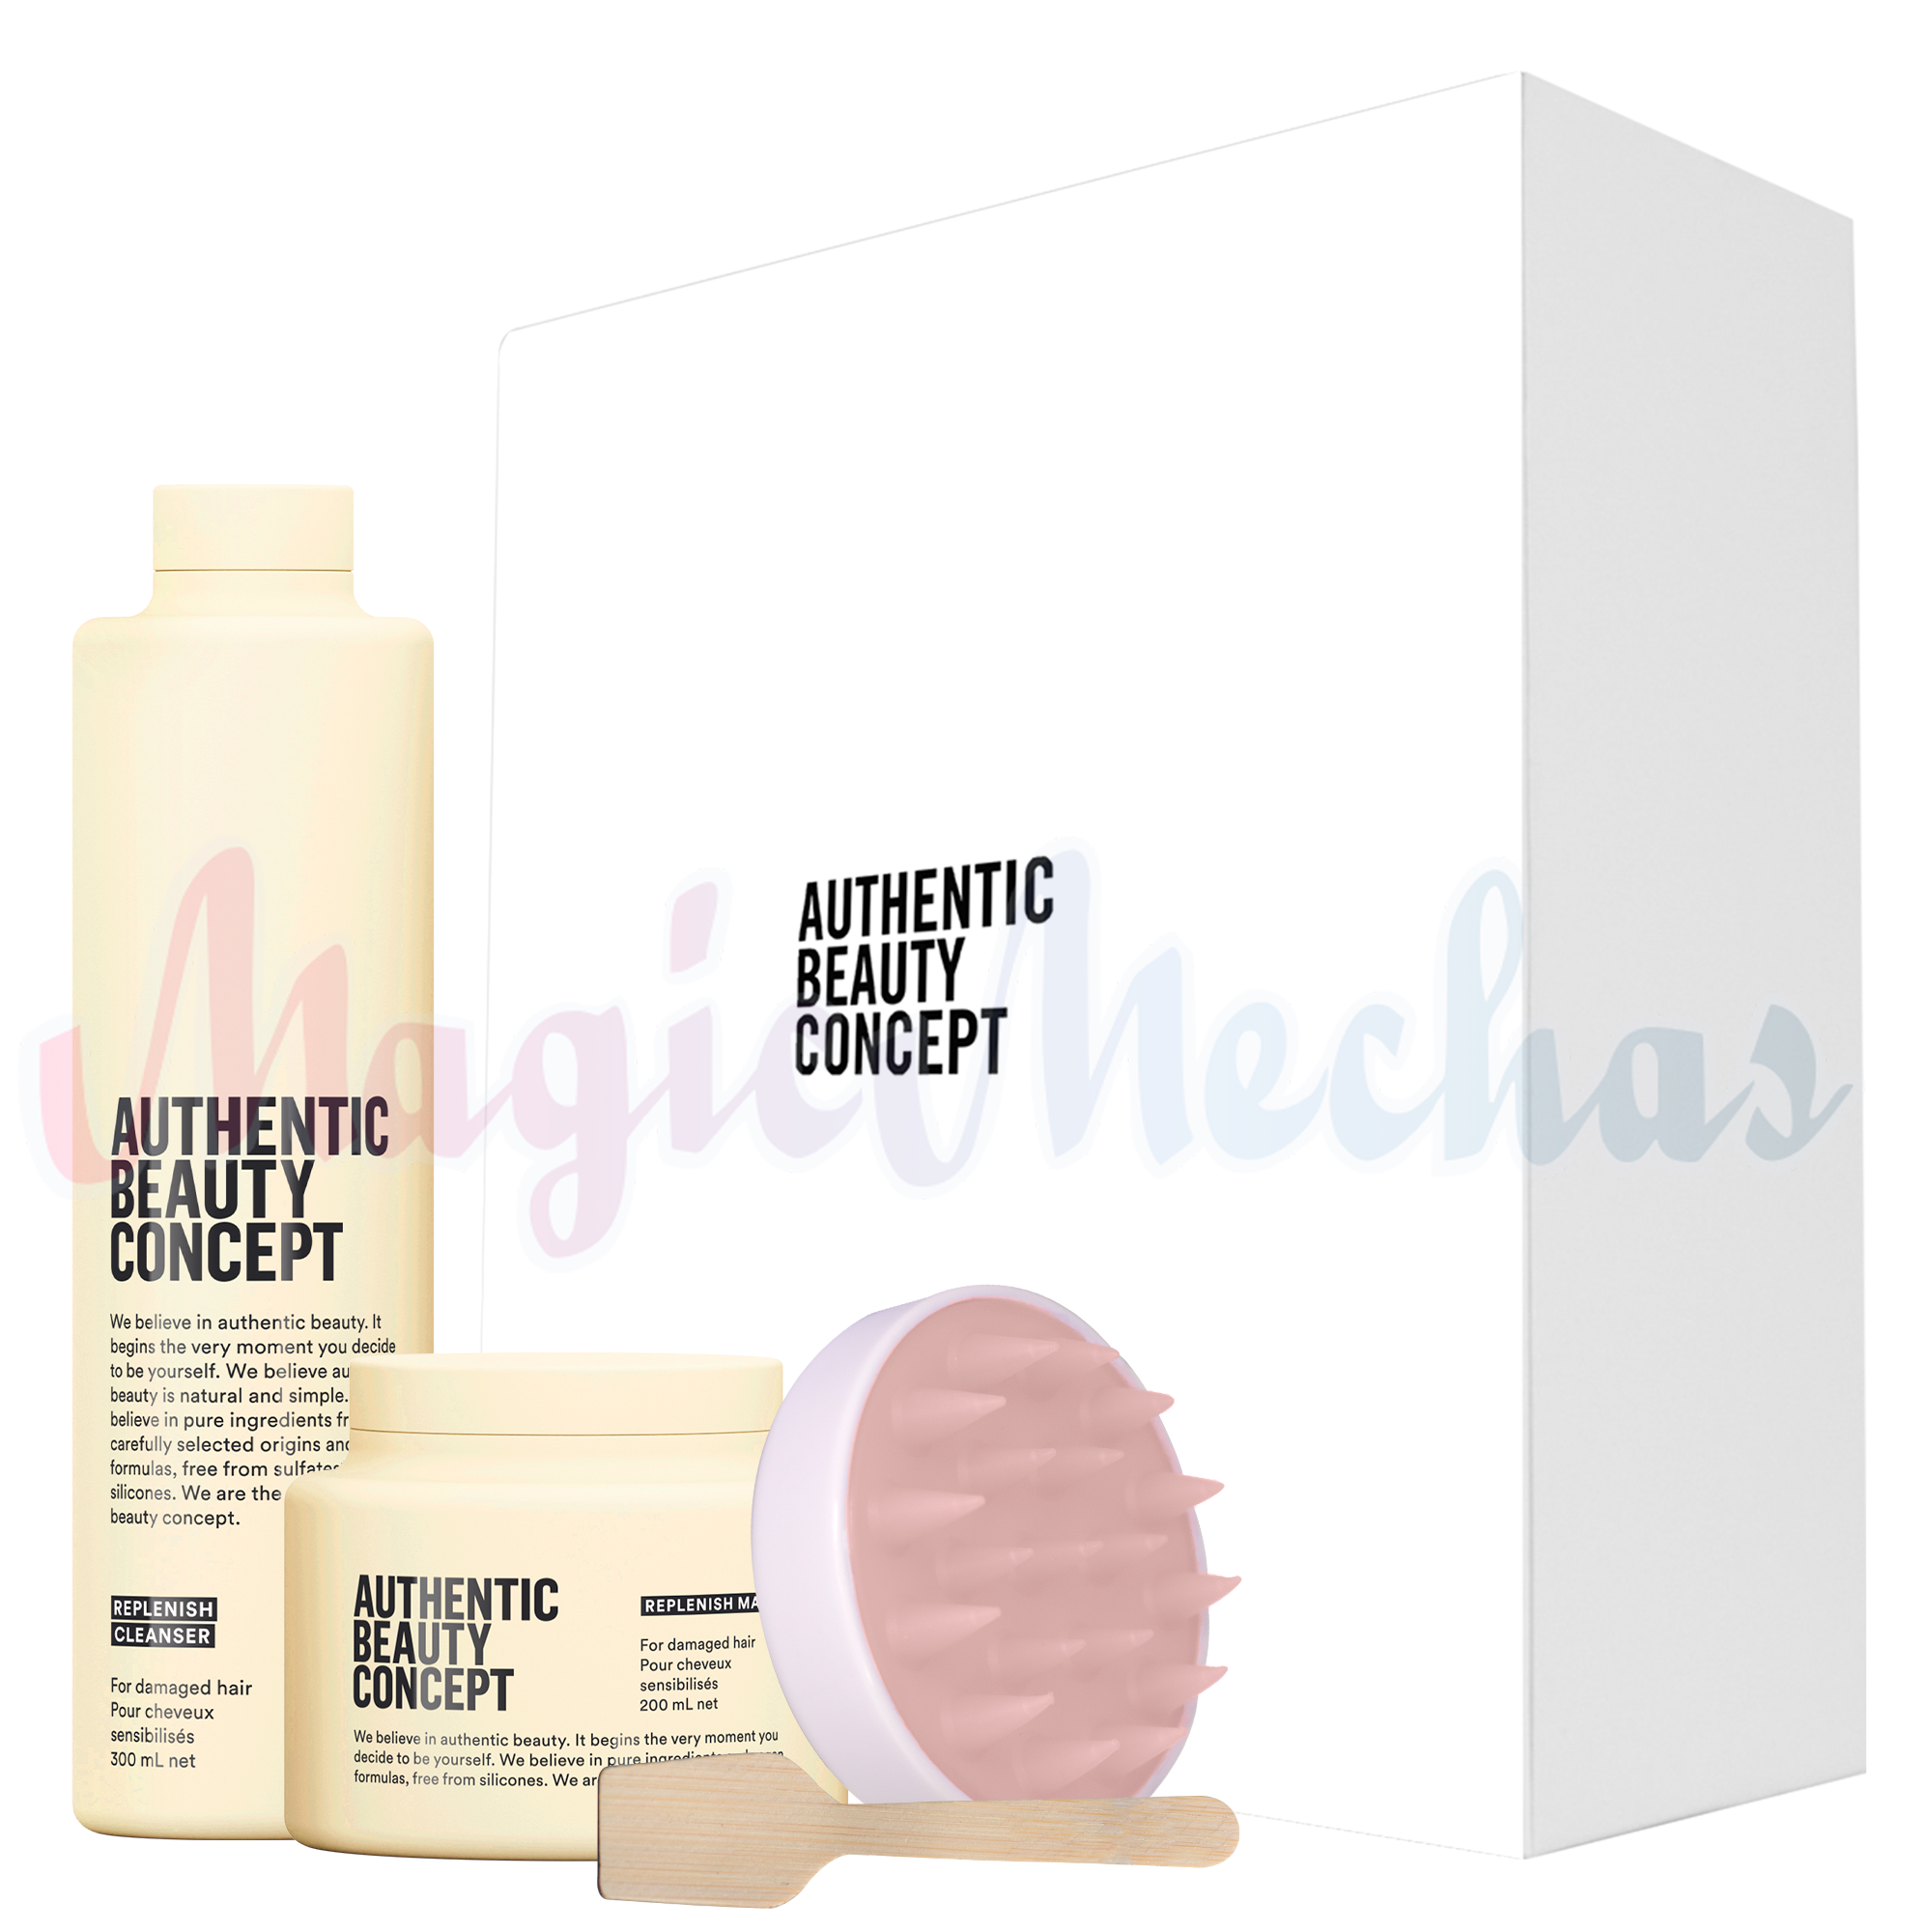 Kit Authentic Beauty Concept Replenish Shampoo + Mascarilla + Obsequio. Authentic Beauty Concept